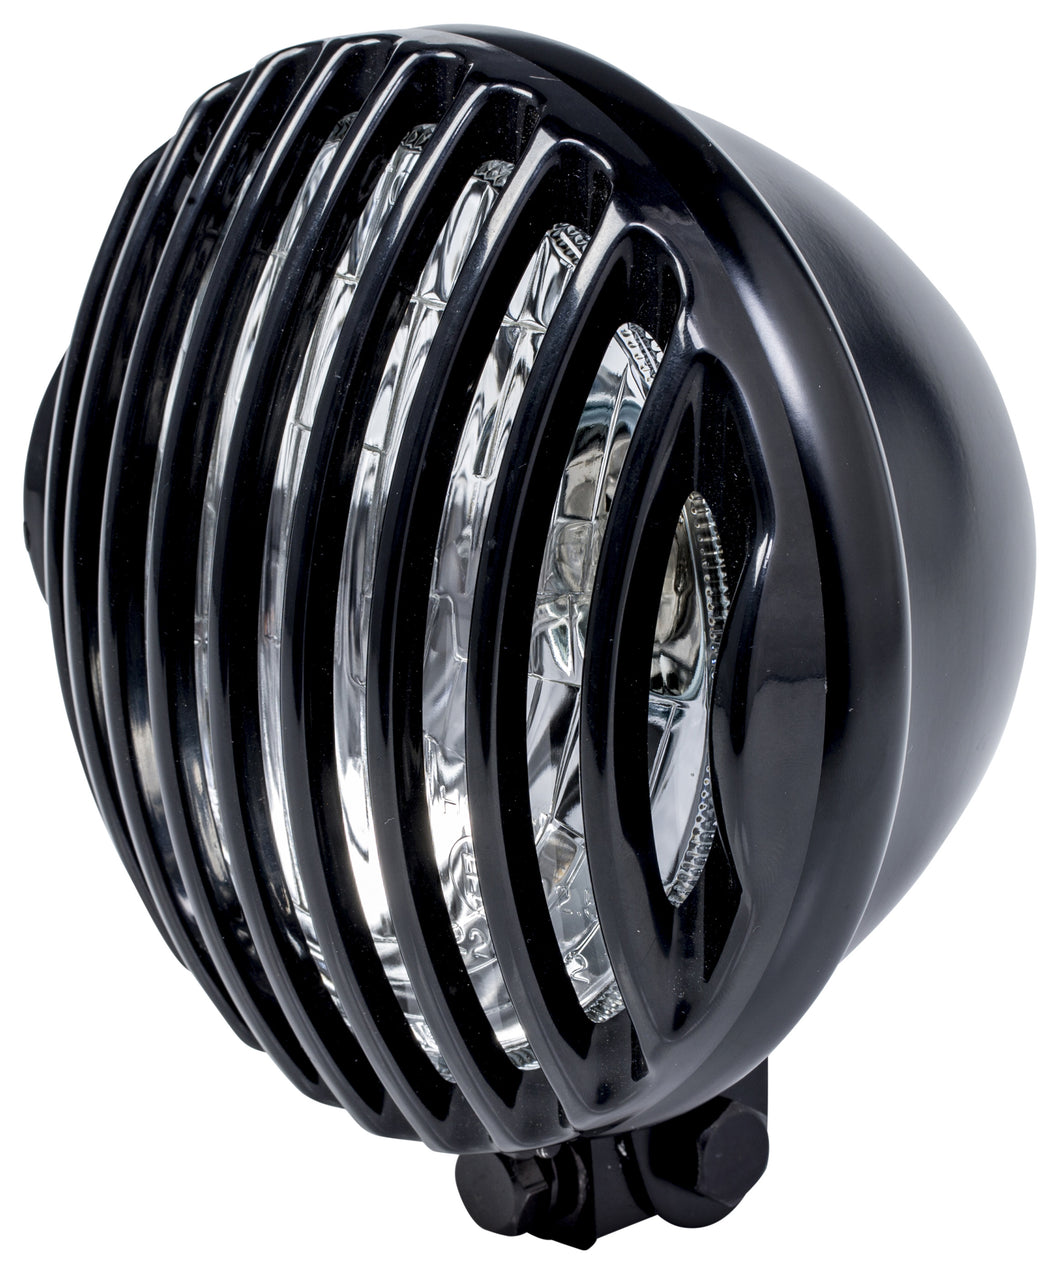 Headlight Grill Cover Steampunk Trim fits 4.5 inch Spotlight - Black